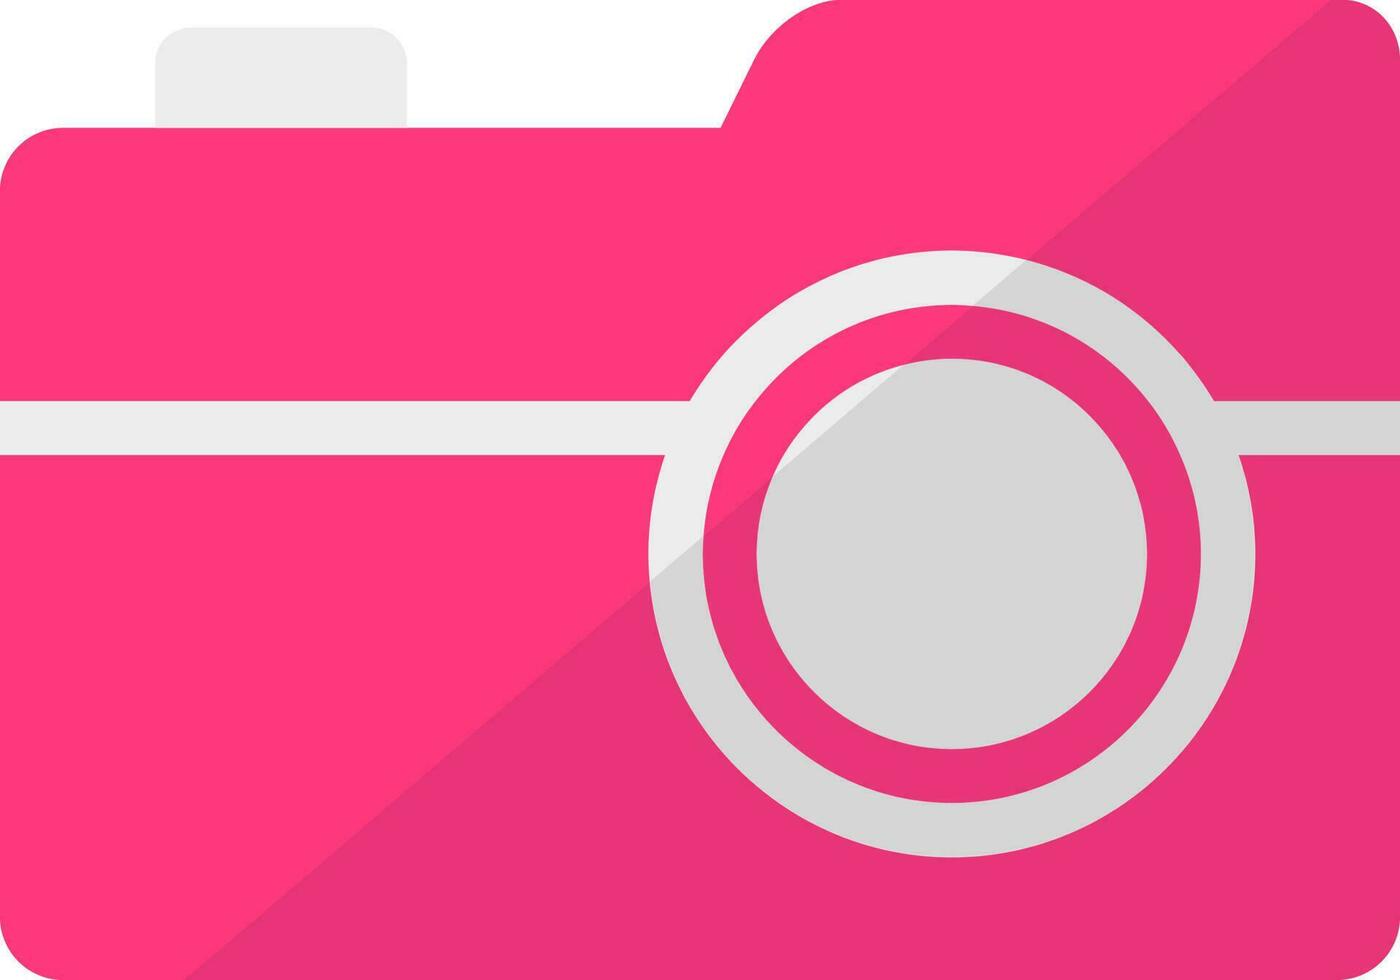 Digital Kamera Symbol im Rosa und grau Farbe. vektor